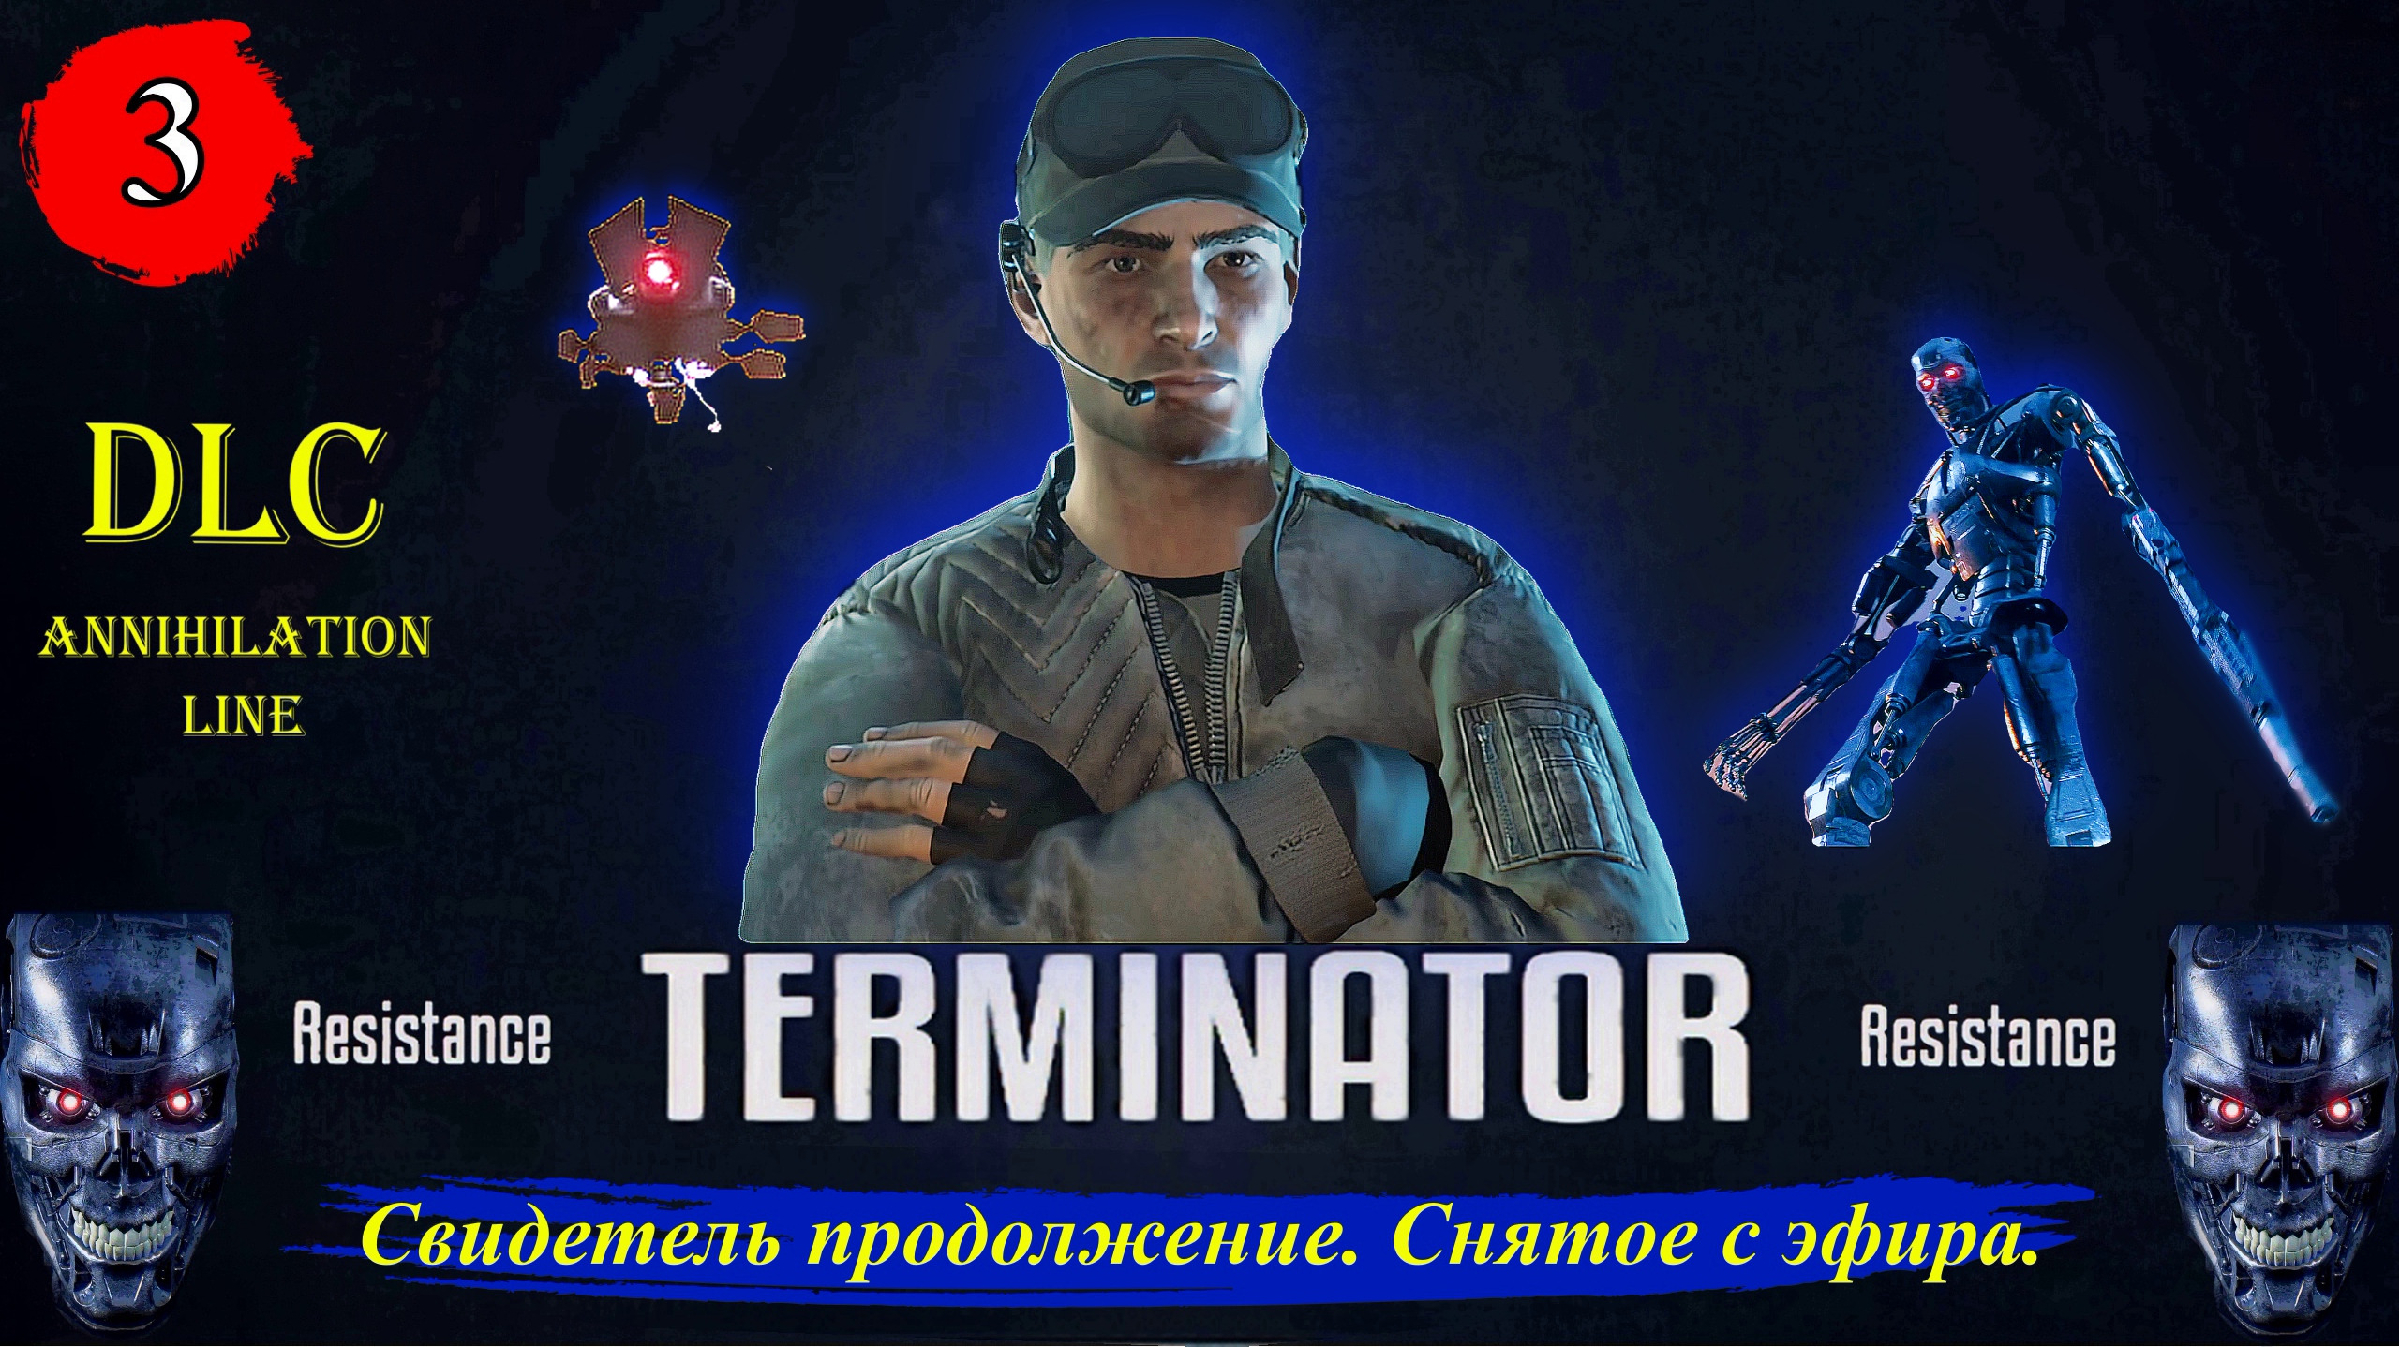 Terminator annihilation line. Terminator: Resistance Annihilation line DLC. Annihilation line. Terminator: Resistance Annihilation line DLC #1.